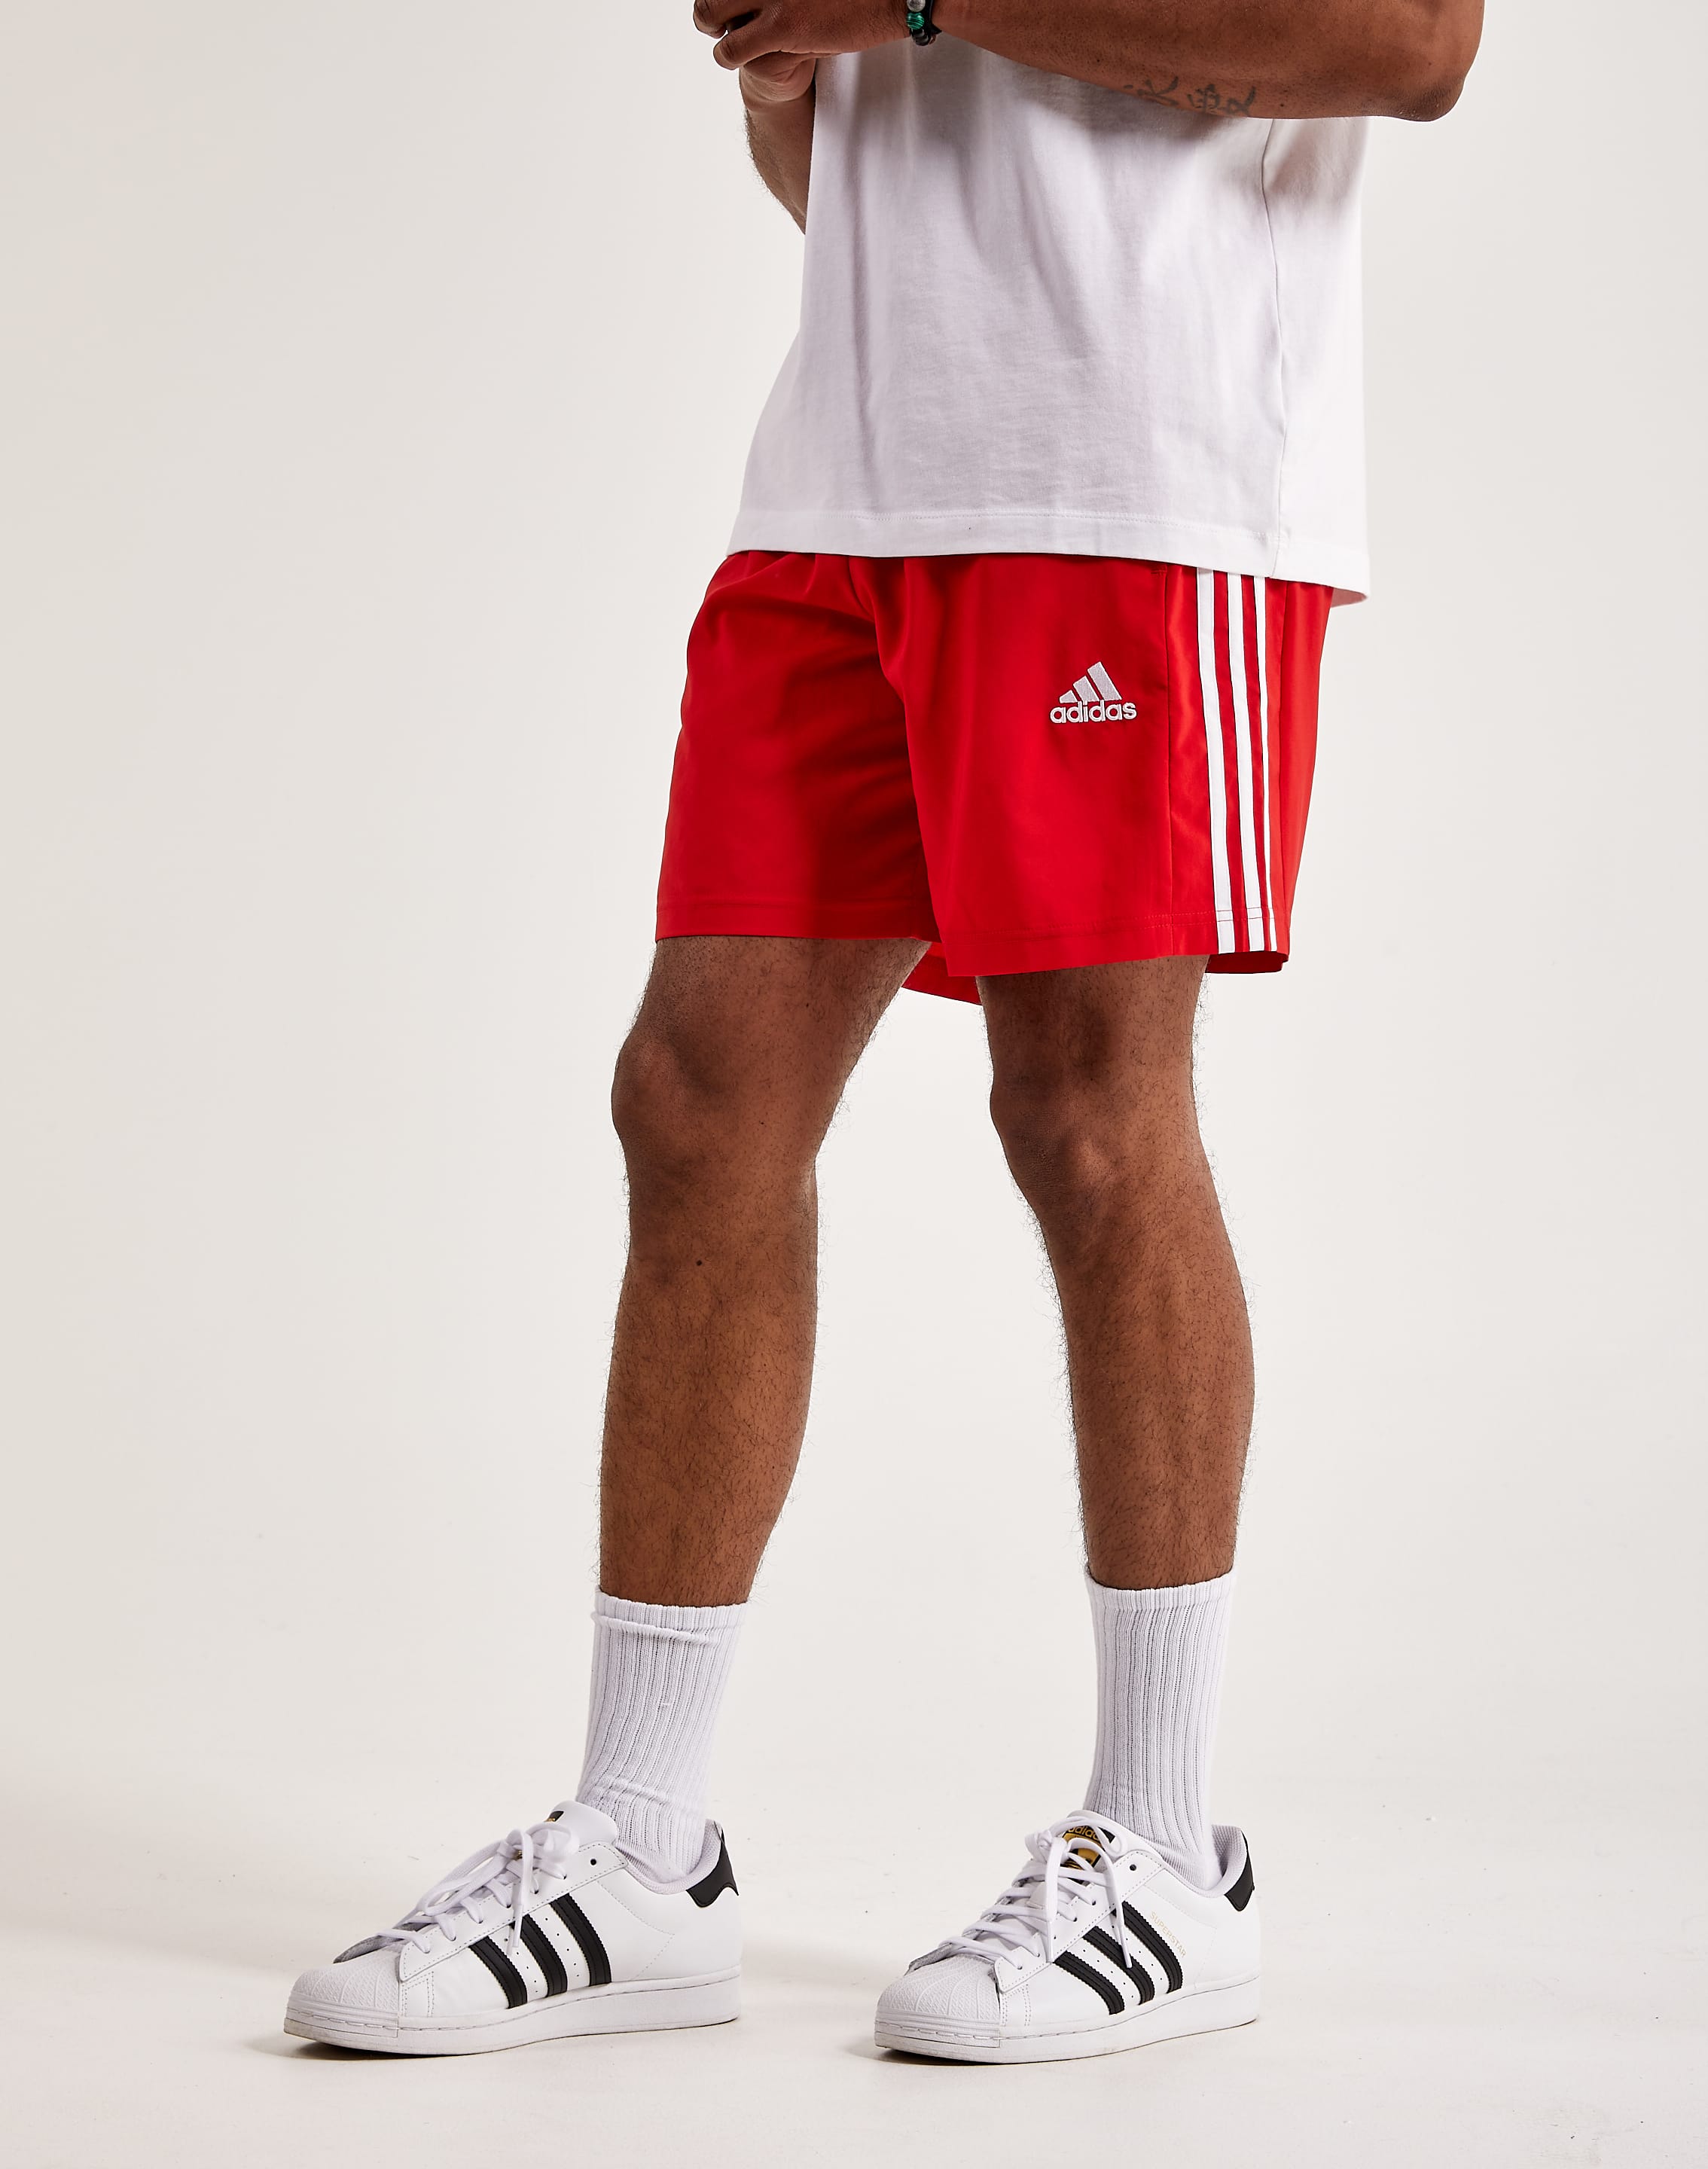 adidas Men's Shorts - Red